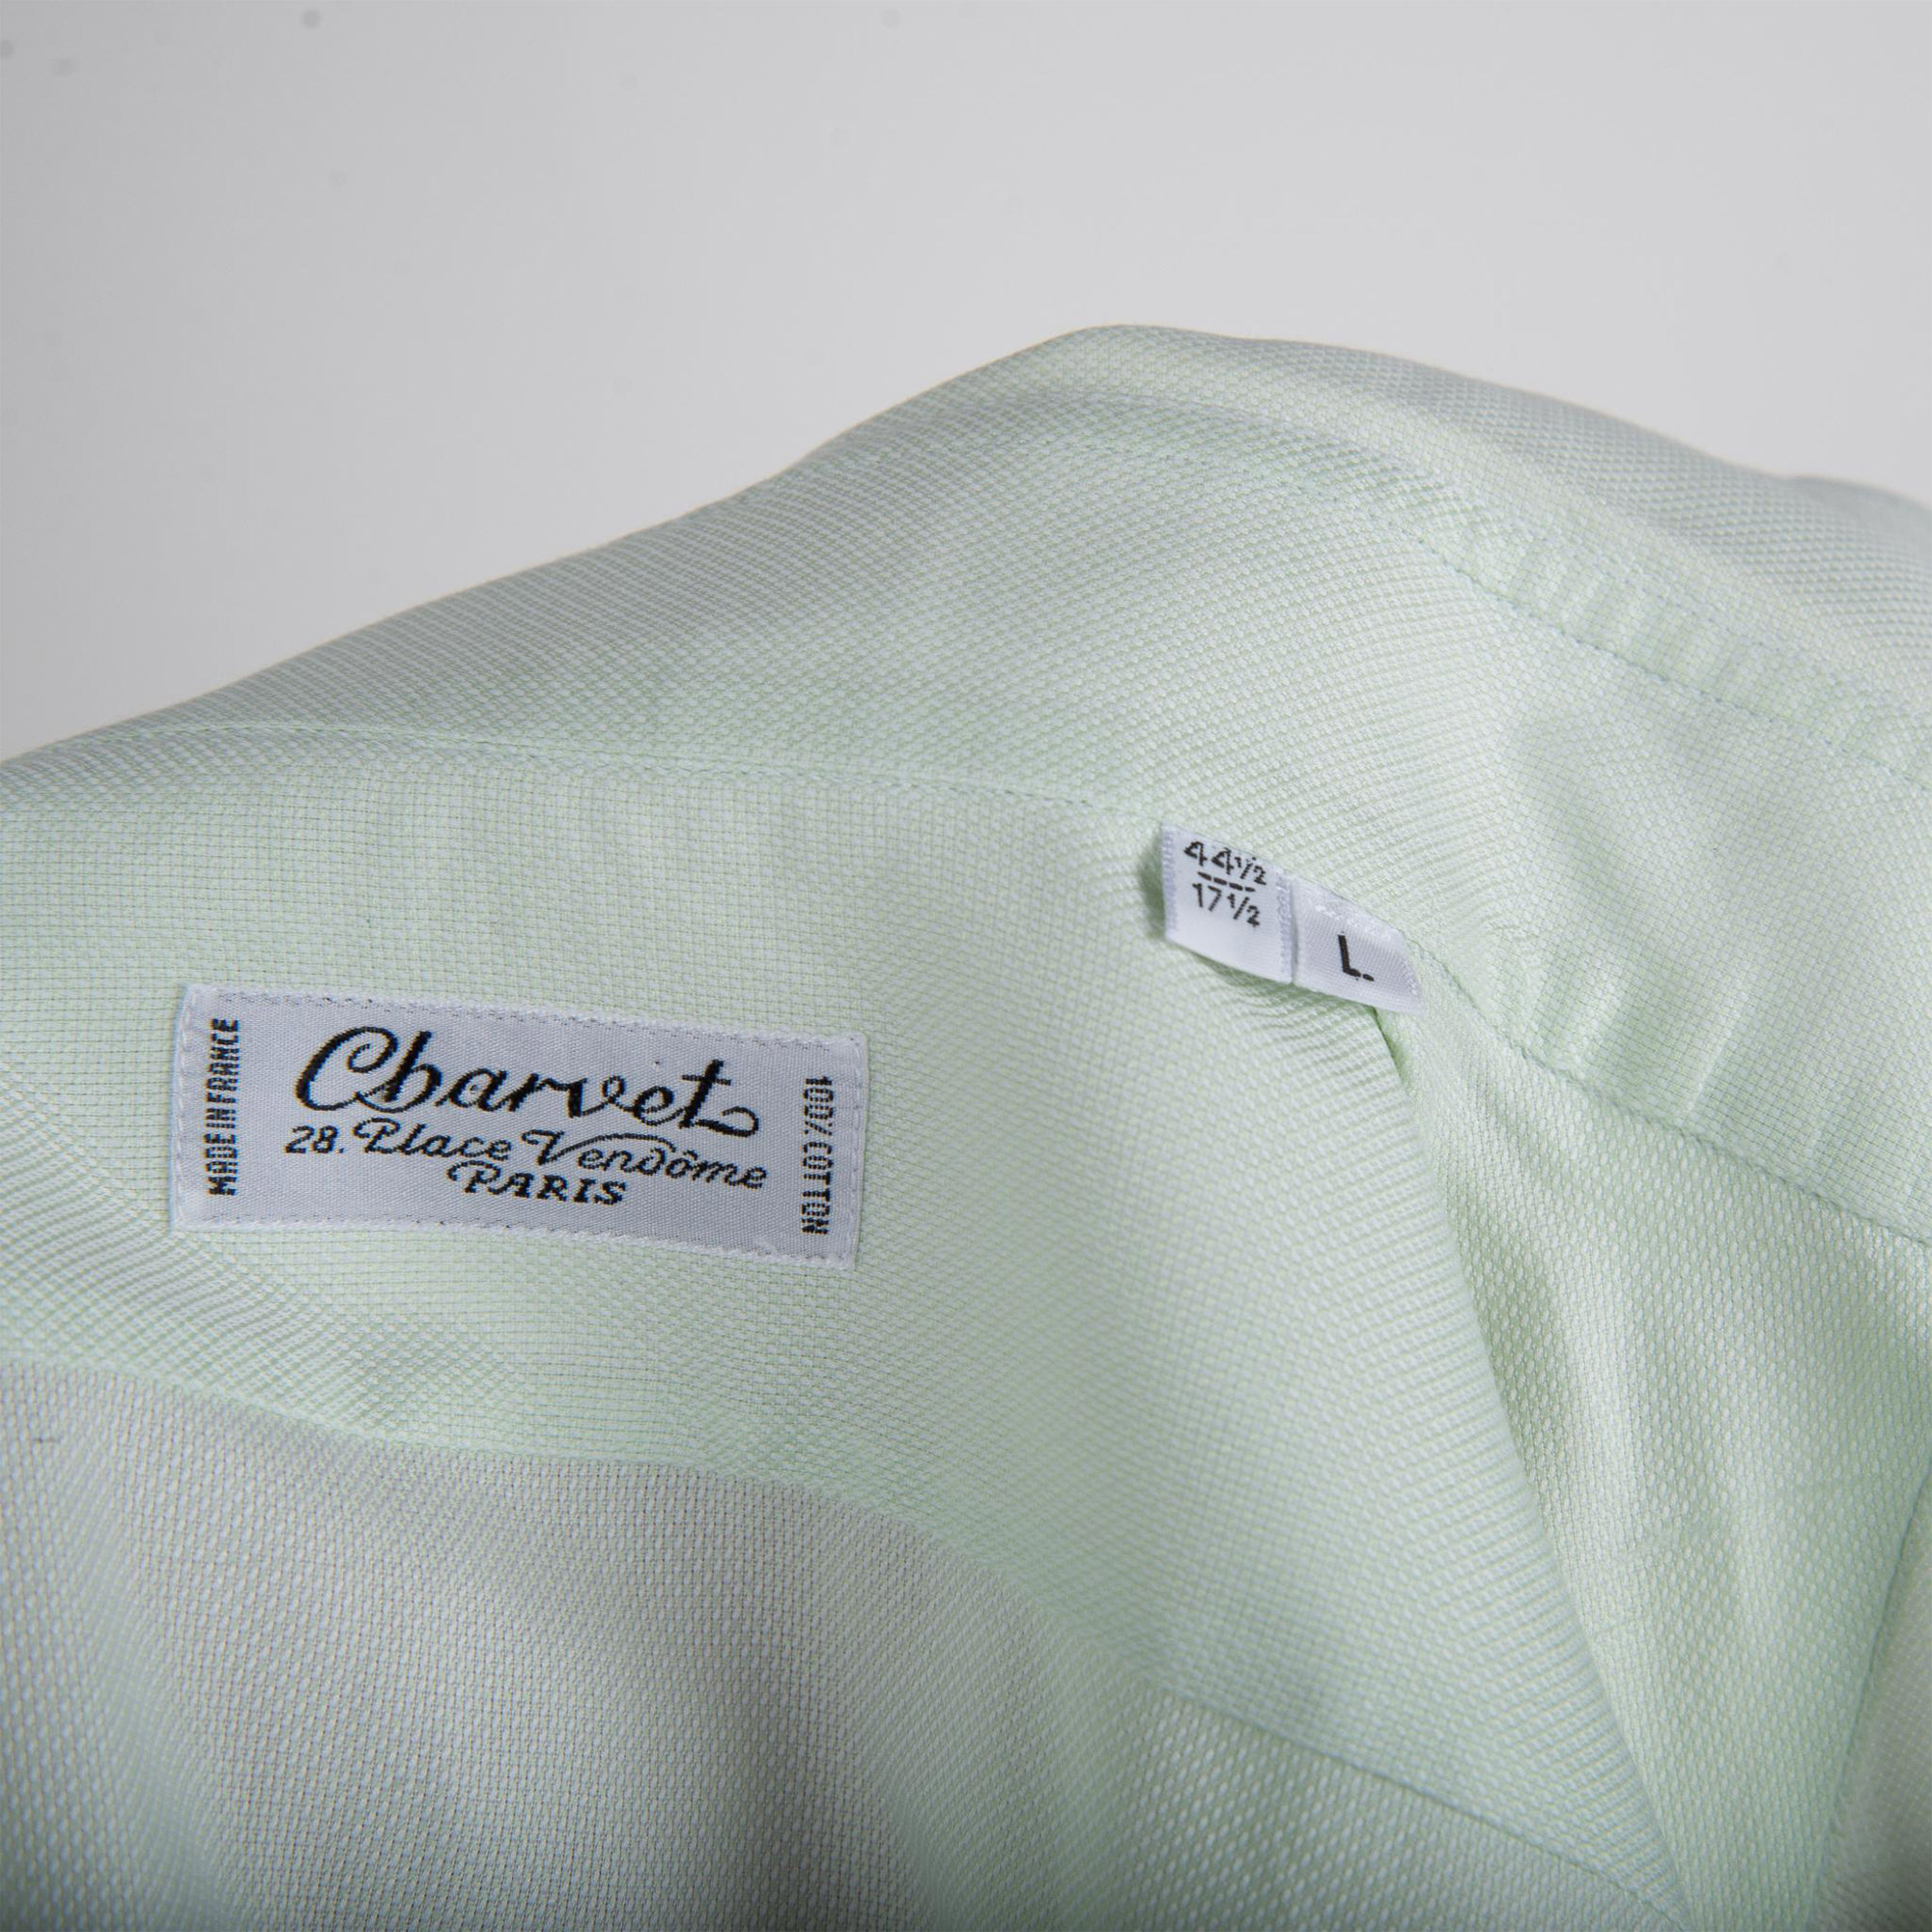 Charvet Men's Long Sleeve Cotton Shirt, Size Large/44.5 - Image 6 of 6